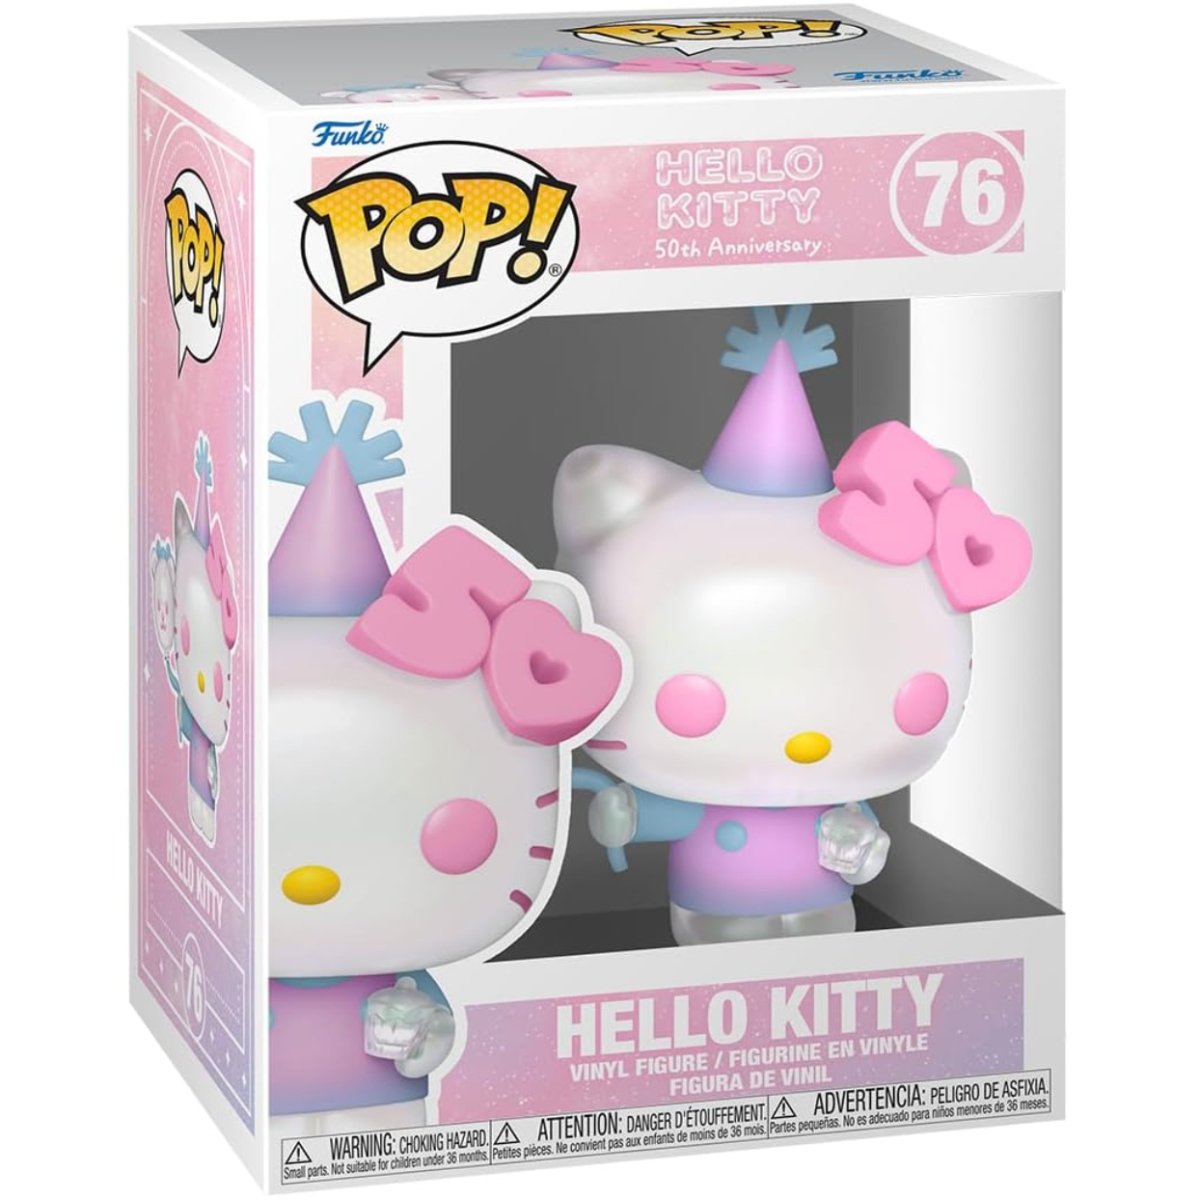 Sanrio - Hello Kitty 50th Anniversary - Hello Kitty [with Balloon] #76 - Funko Pop! Vinyl Anime - Persona Toys